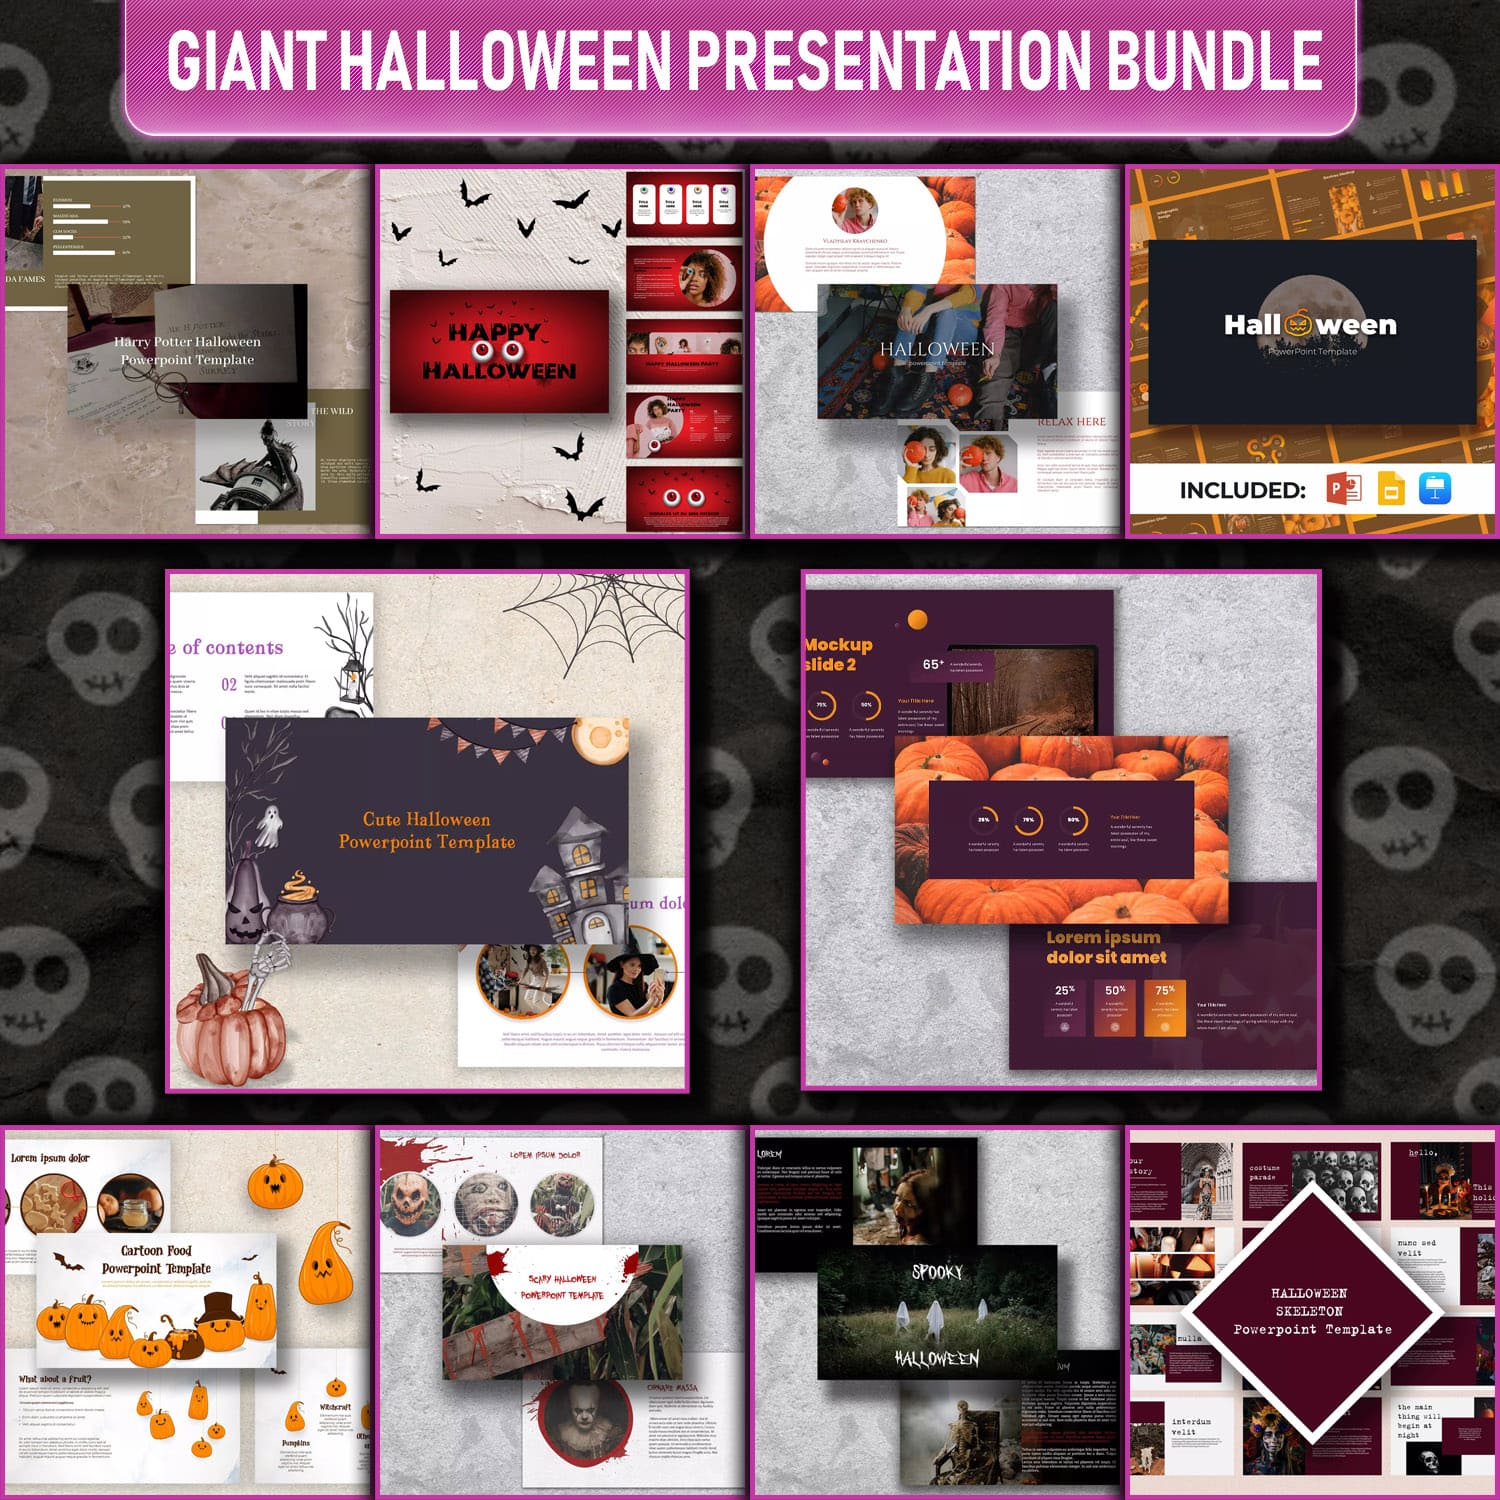 Giant Halloween Presentation Bundle cover image.